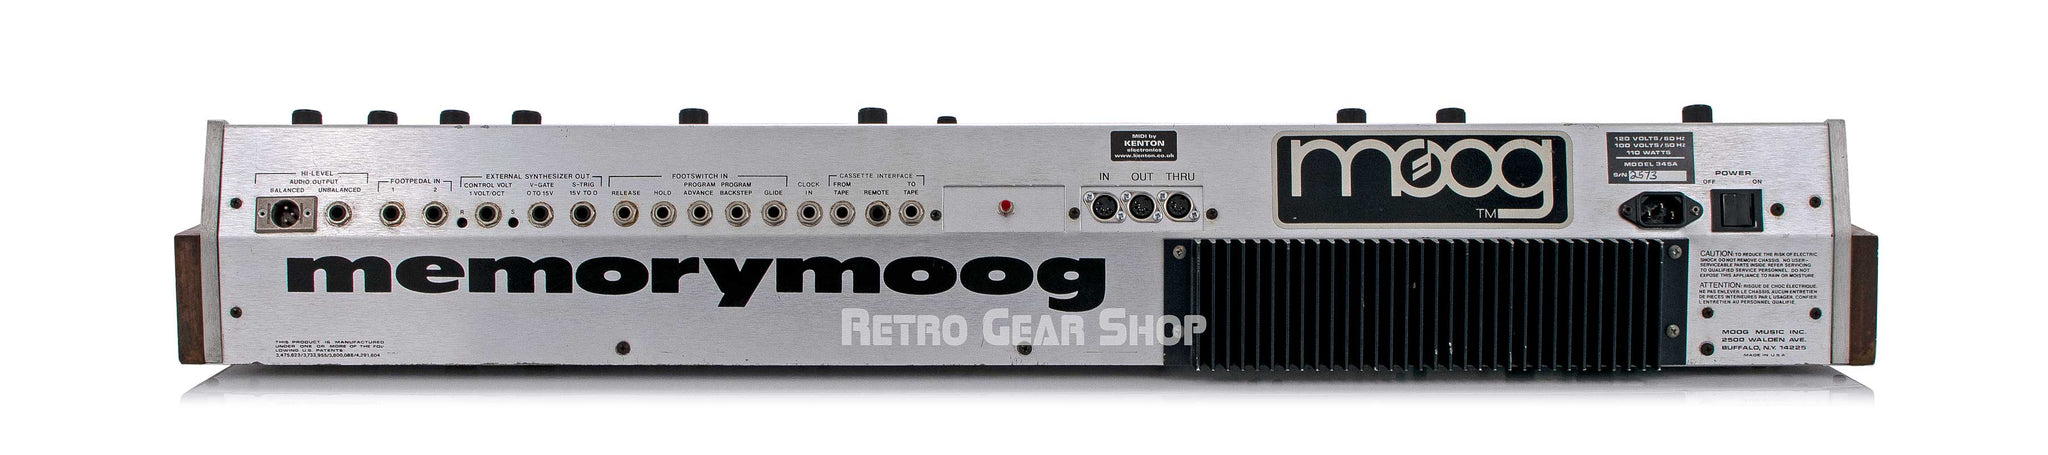 Moog Memorymoog Rear